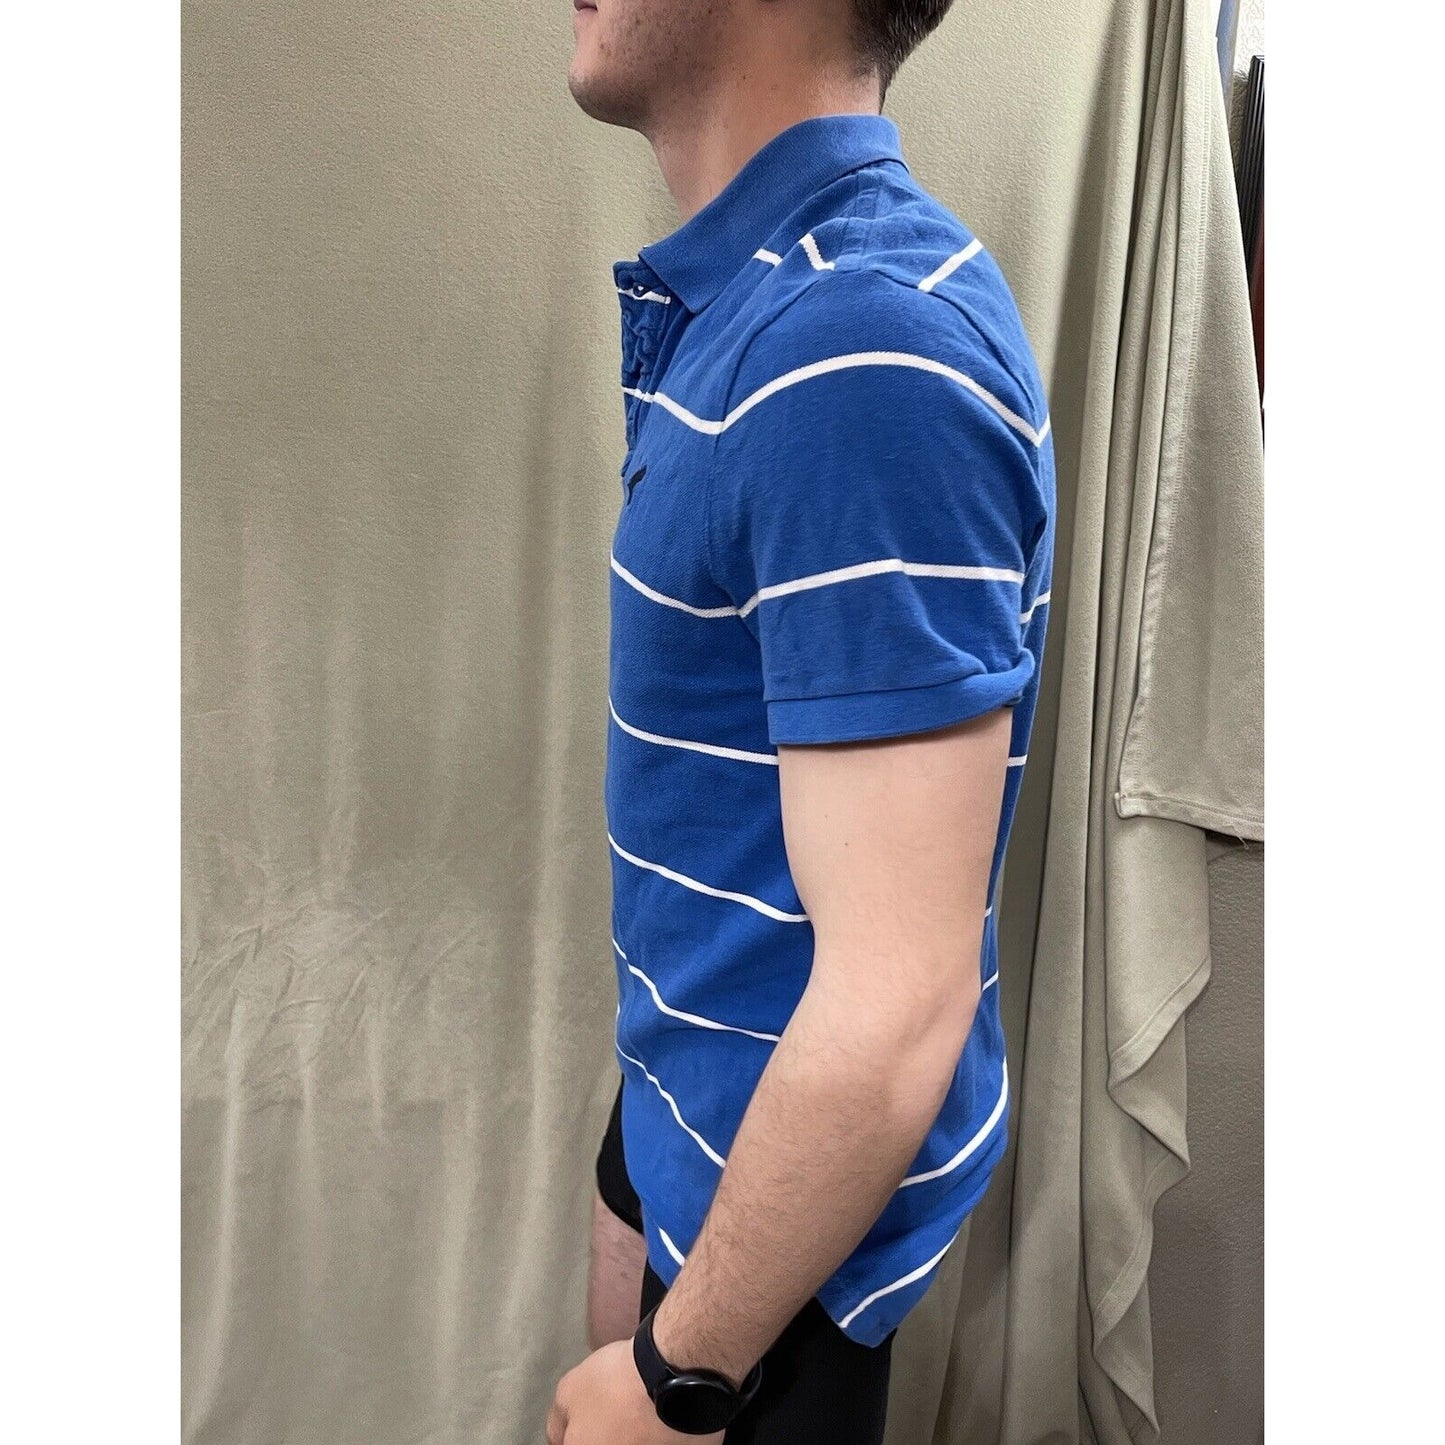 American Eagle Mens Polo Shirt Medium M Blue White Striped Short Sleeves Vintage